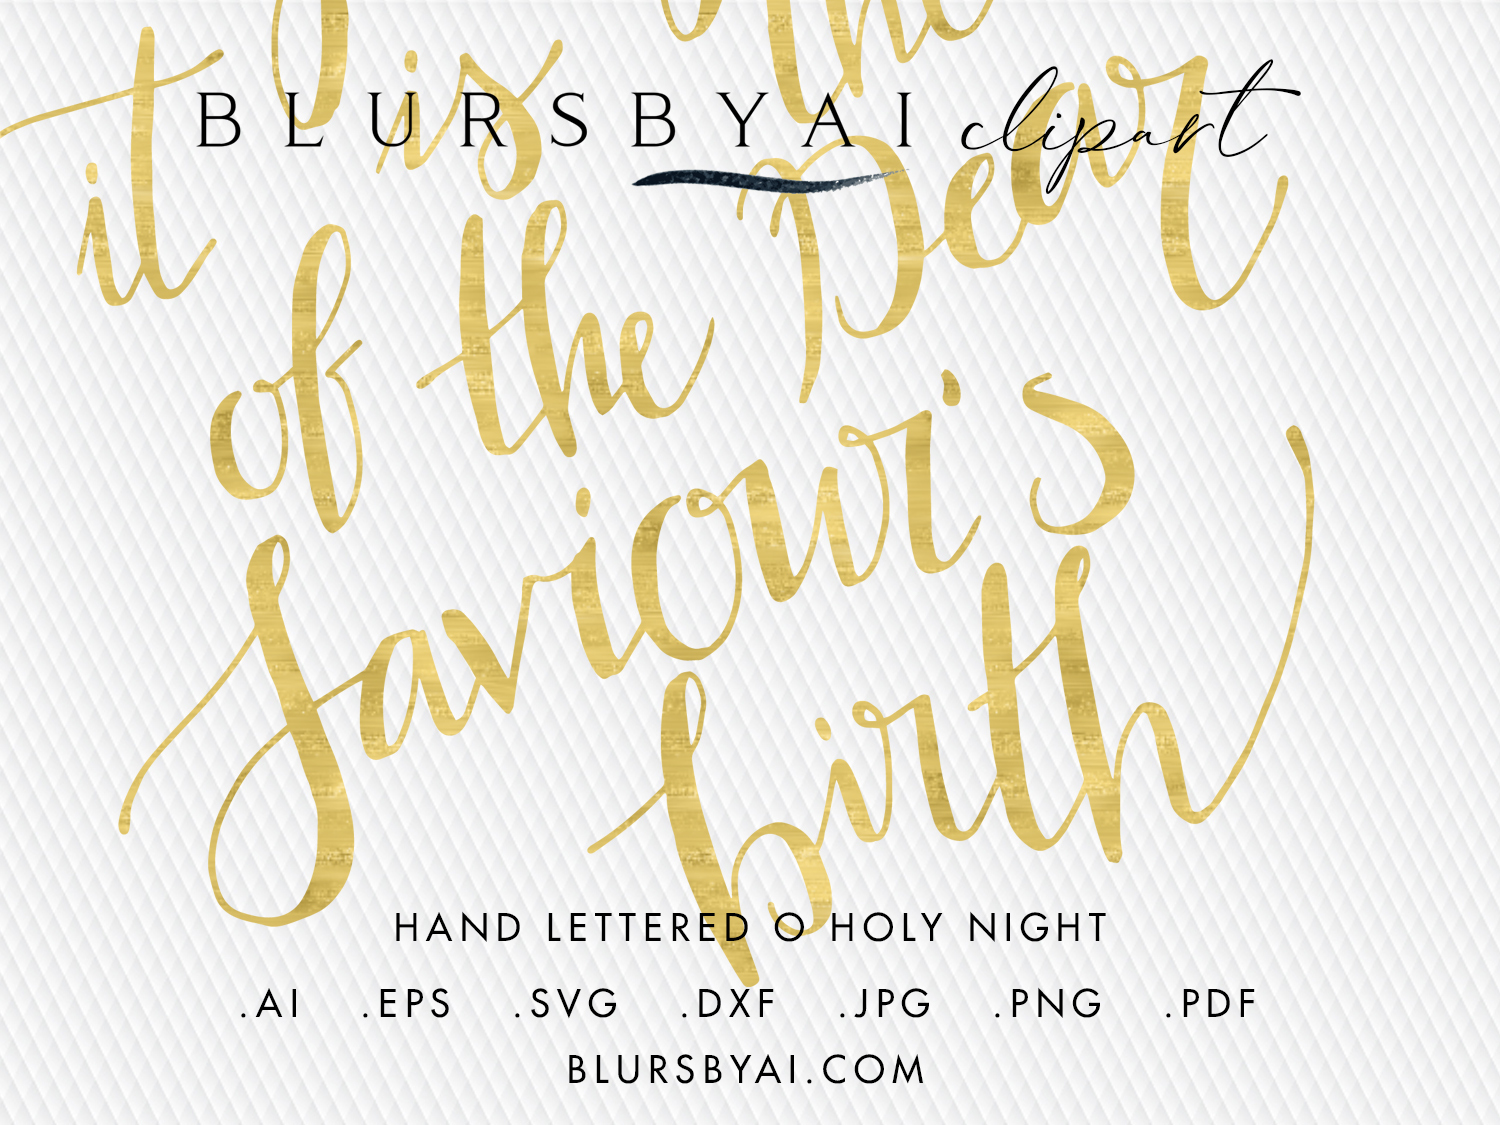 O Holy Night Lyrics Clipart Graphic By Blursbyai Creative Fabrica